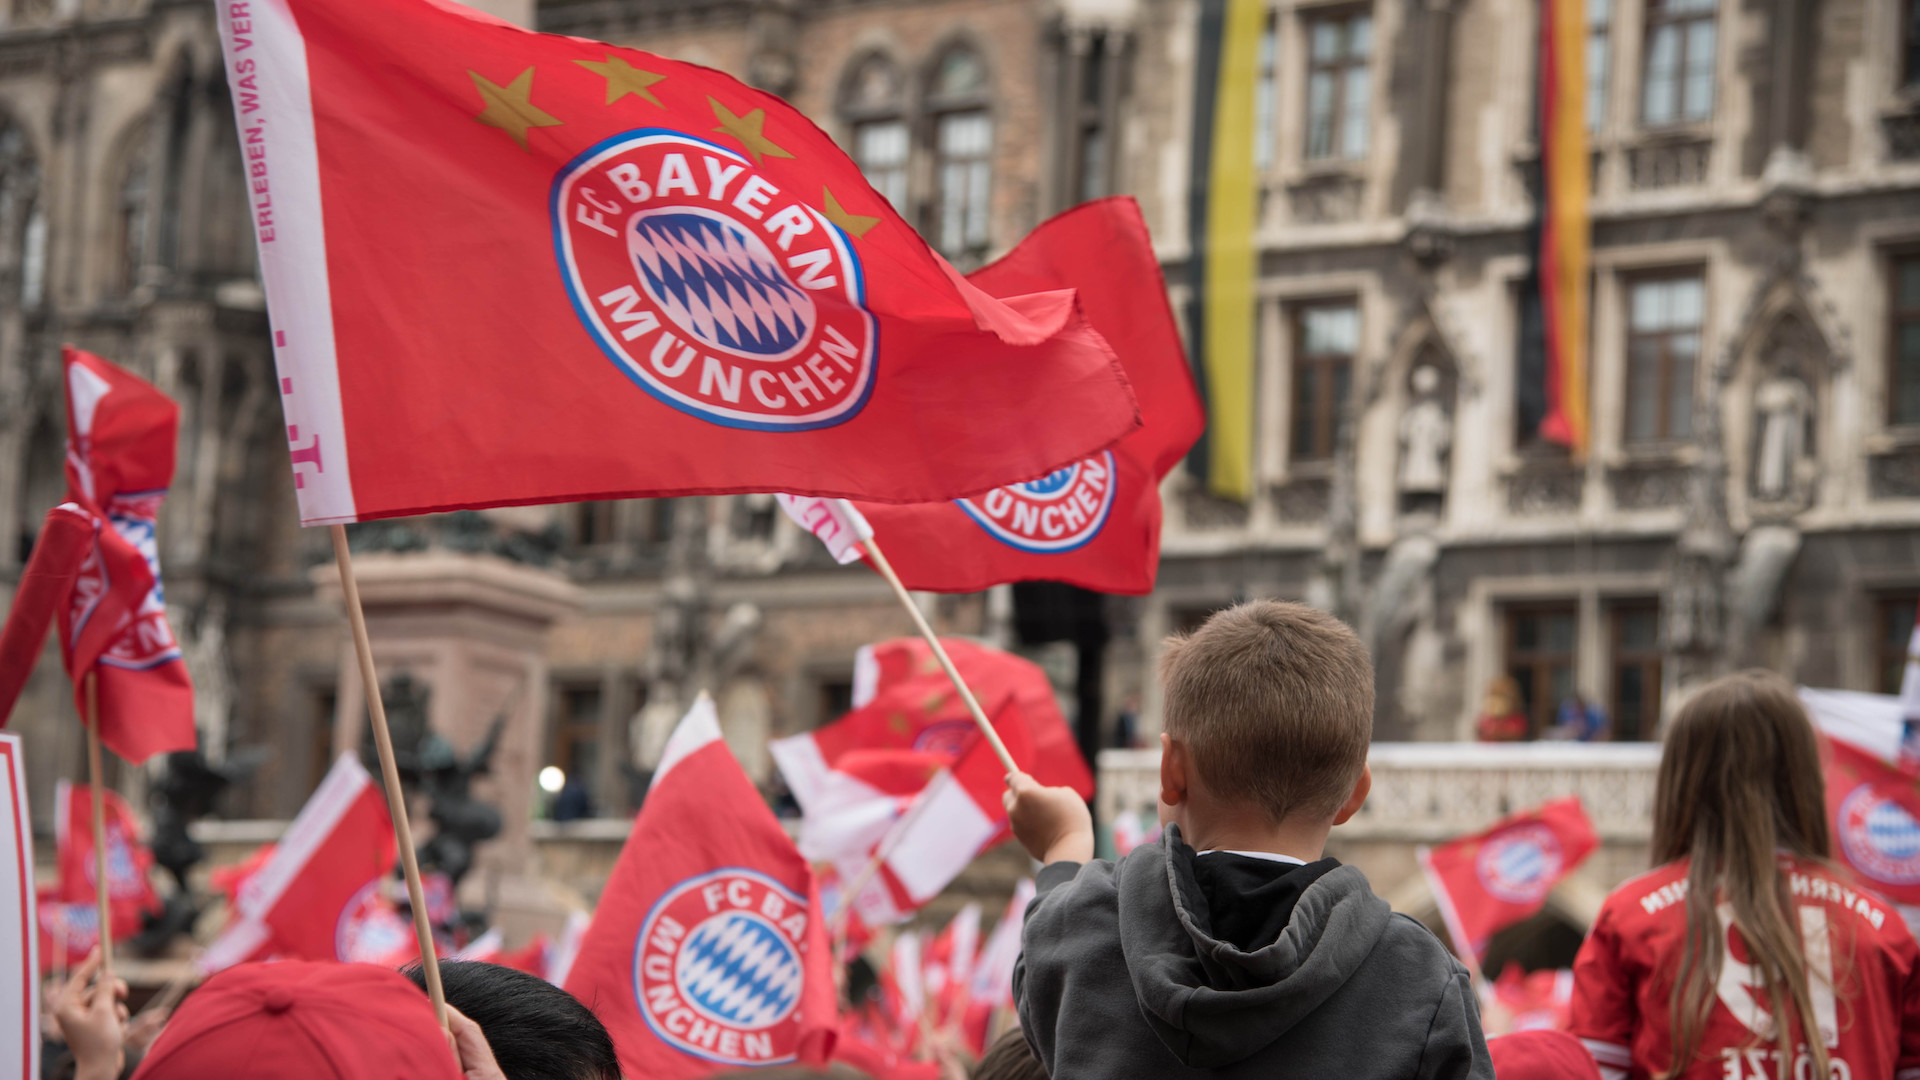 Bayern Munich fans in the street